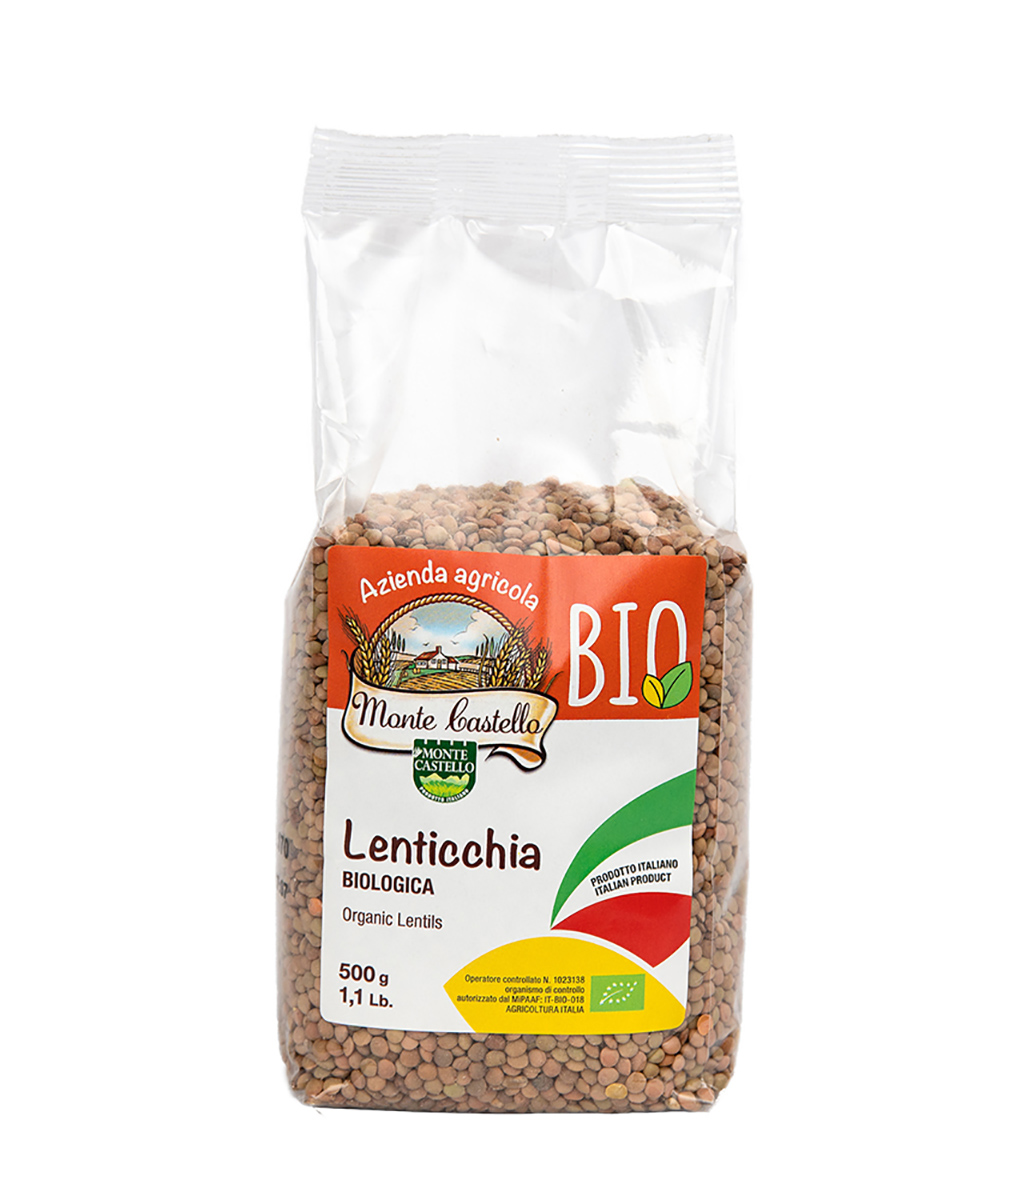 Organic lentils